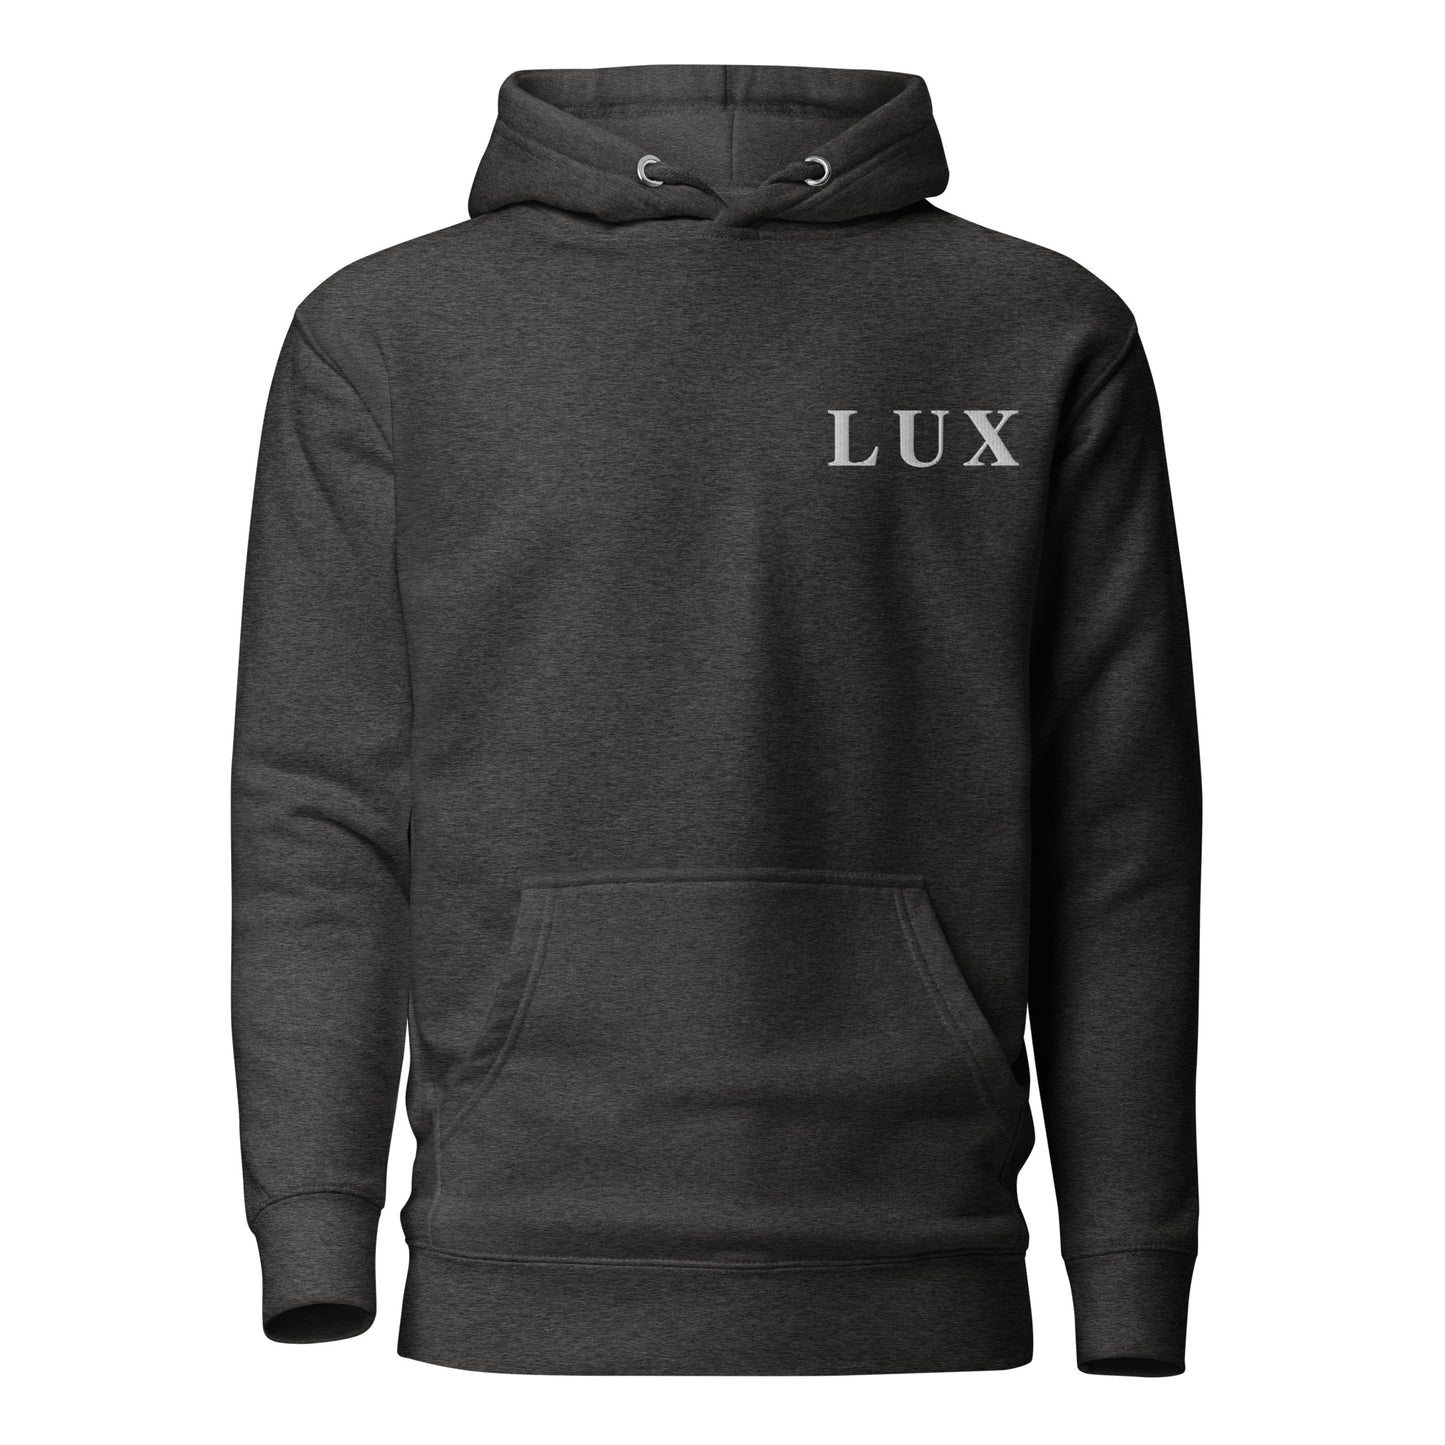 "LUX" Hooded Sweatshirt (Unisex)